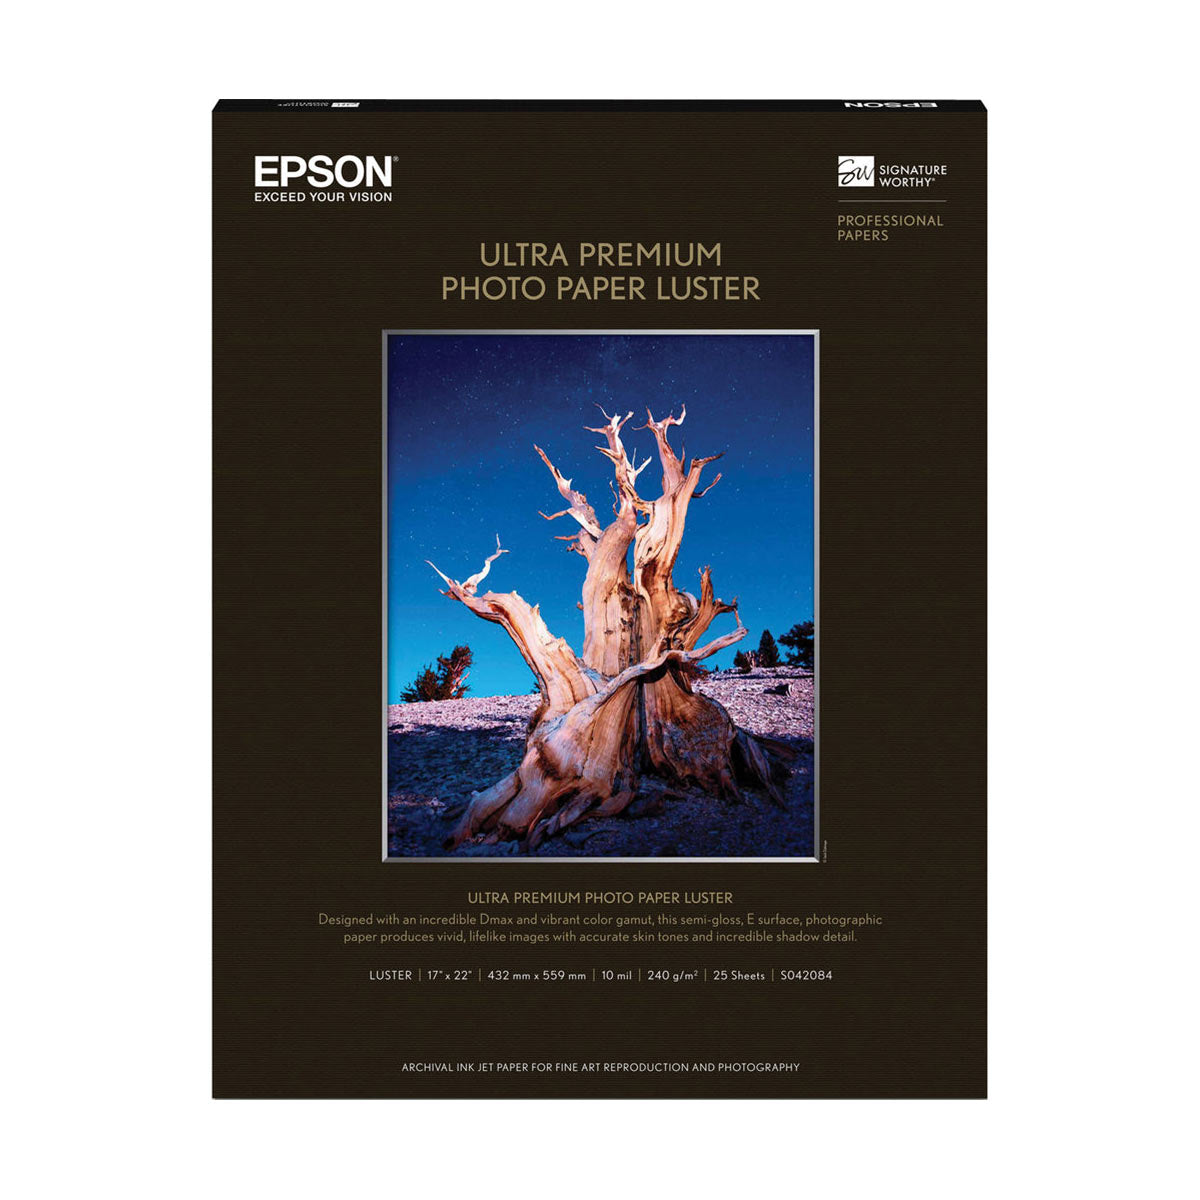 Epson Ultra Premium Photo Paper Luster 17x22" (25)